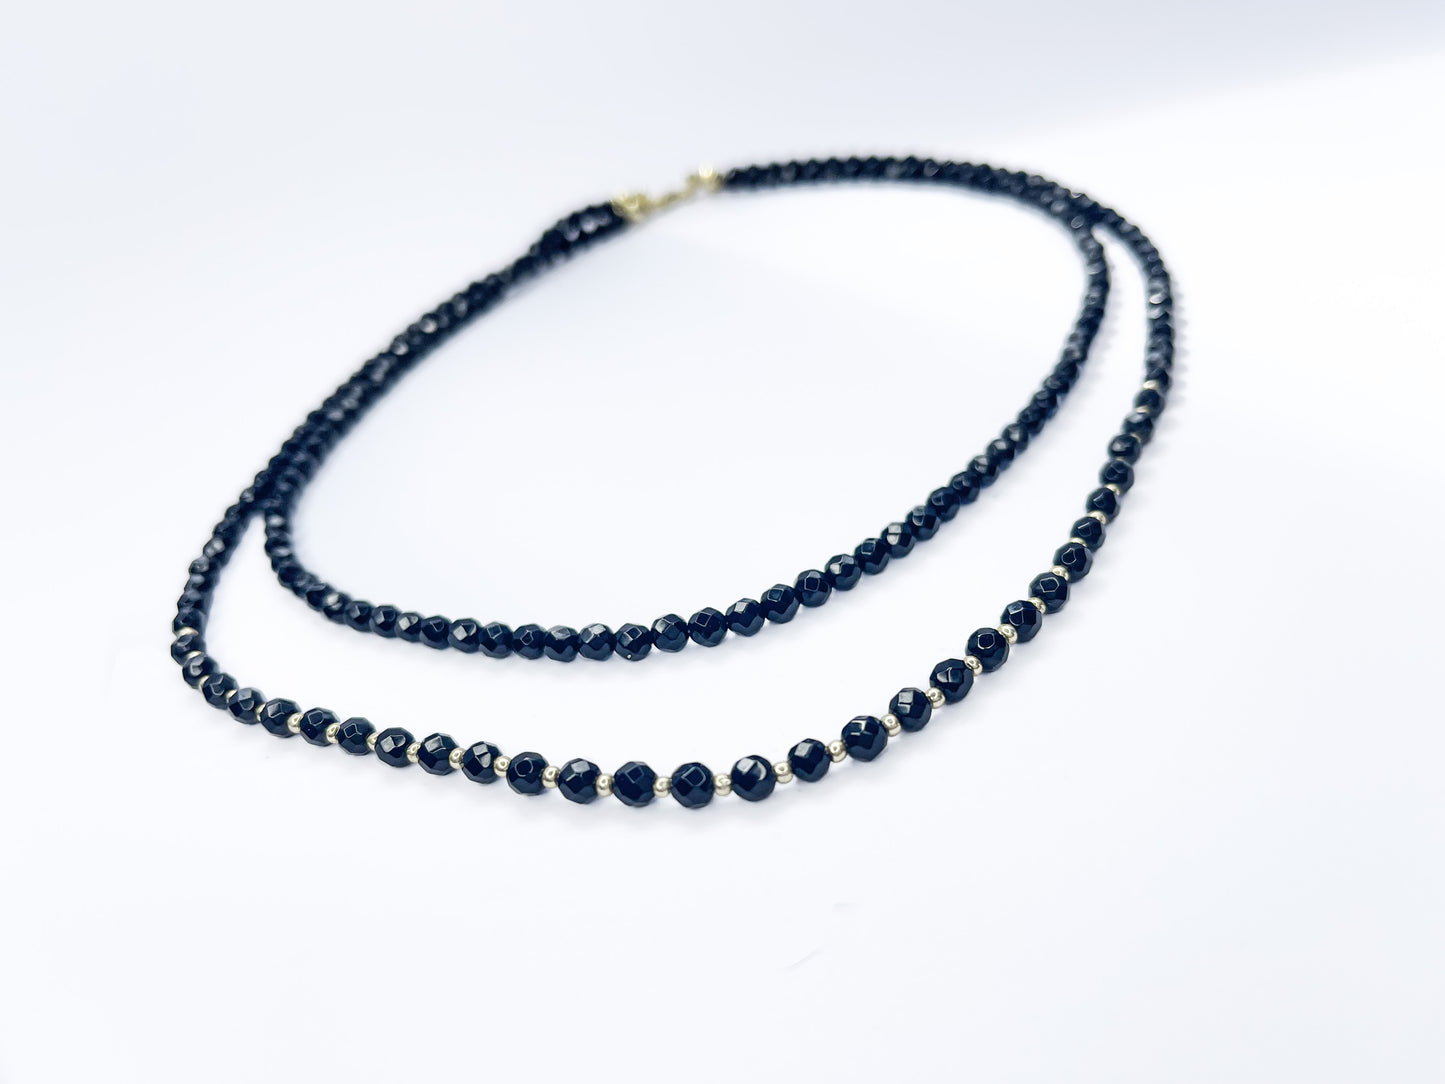 Black onyx layered necklace